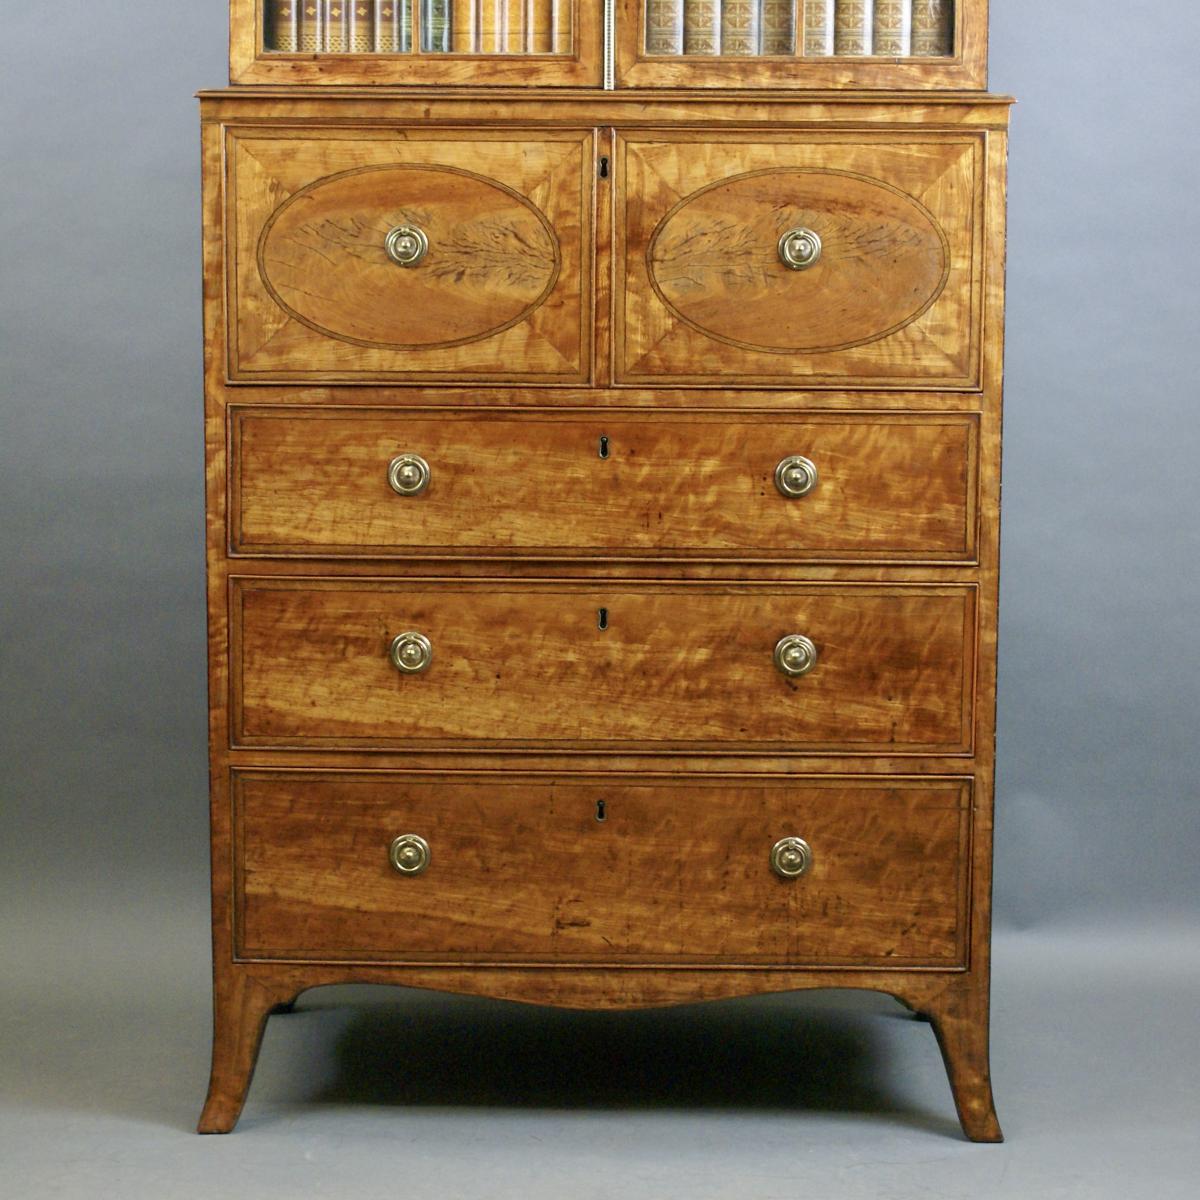 George III period satinwood secretaire bookcase / display cabinet